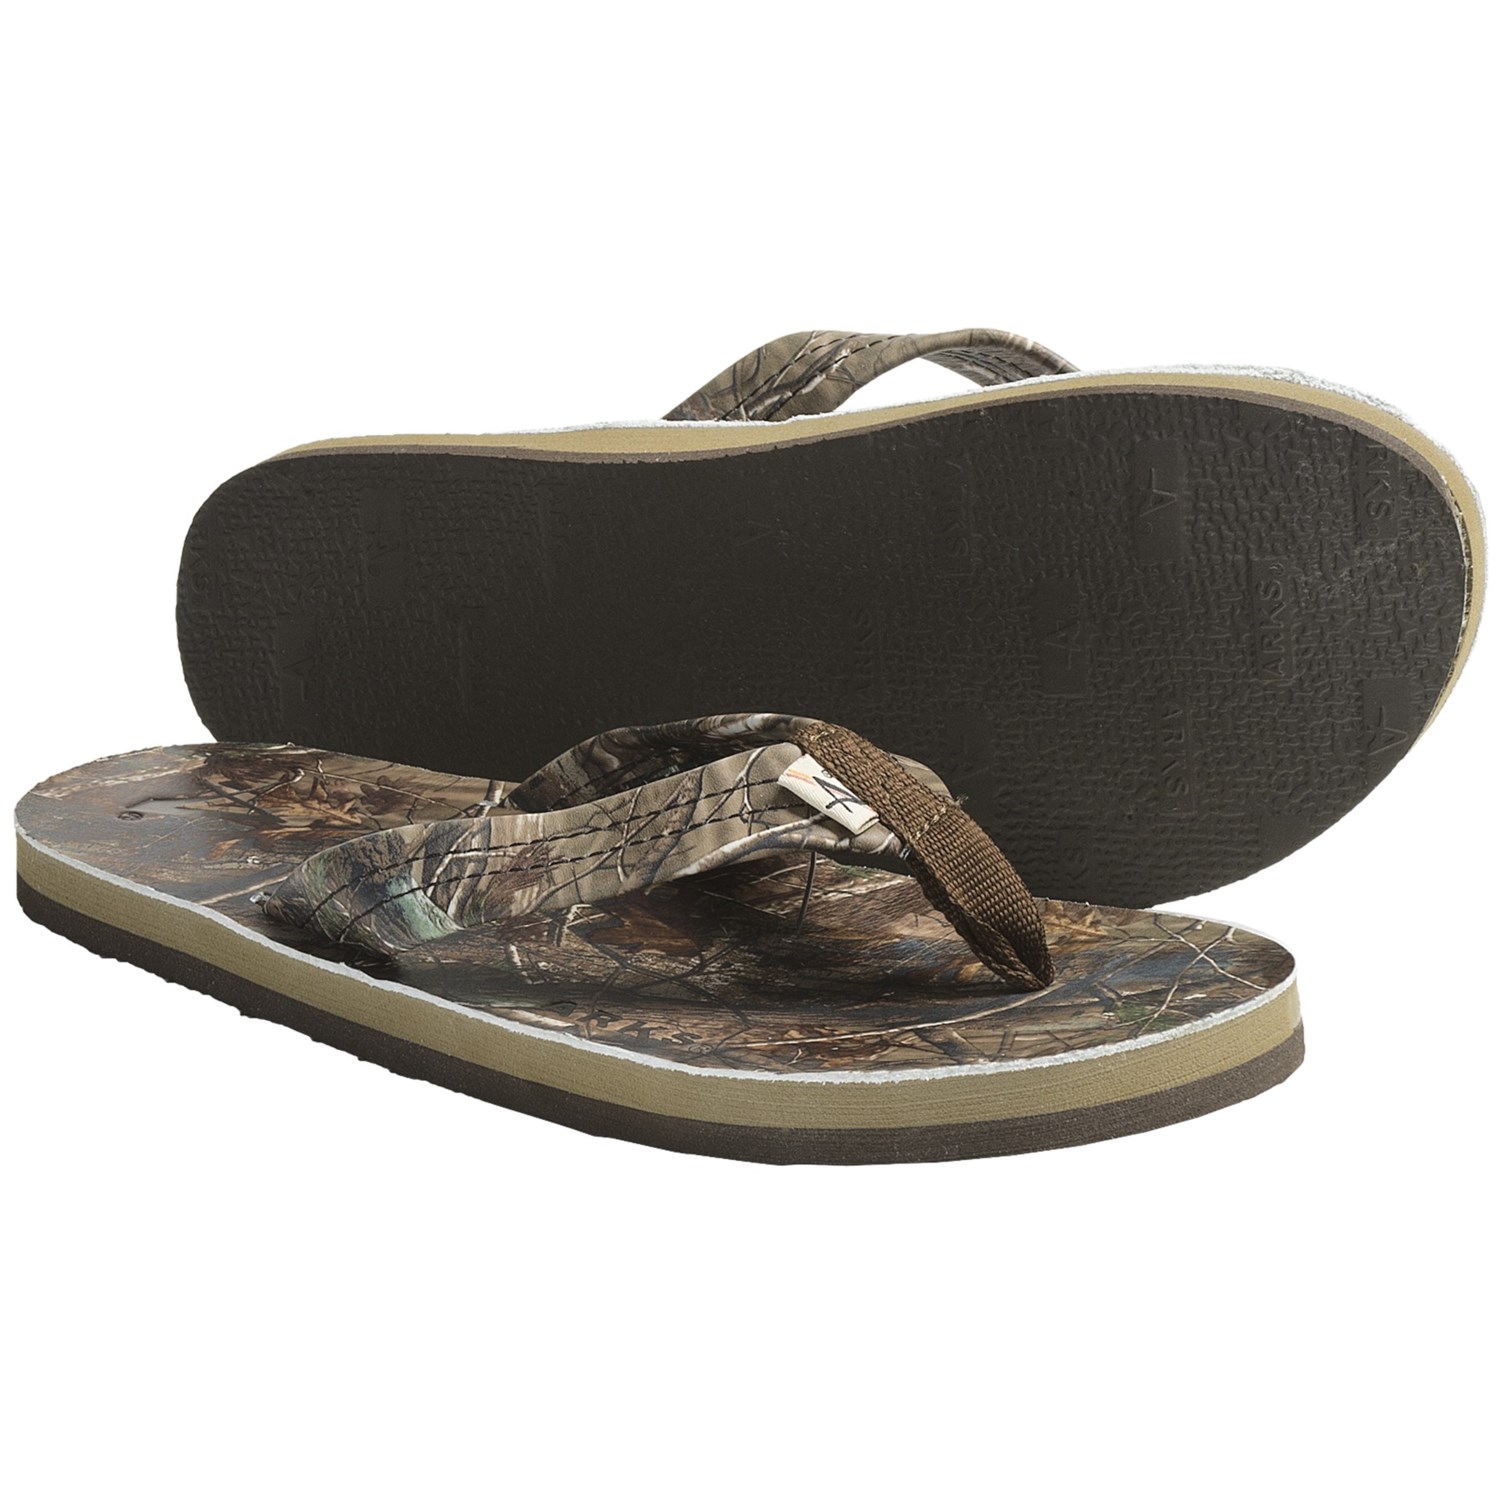 Arks Otudoors Realtree AP® Camo Thong Sandals (For Men) 4755W - Save 55%